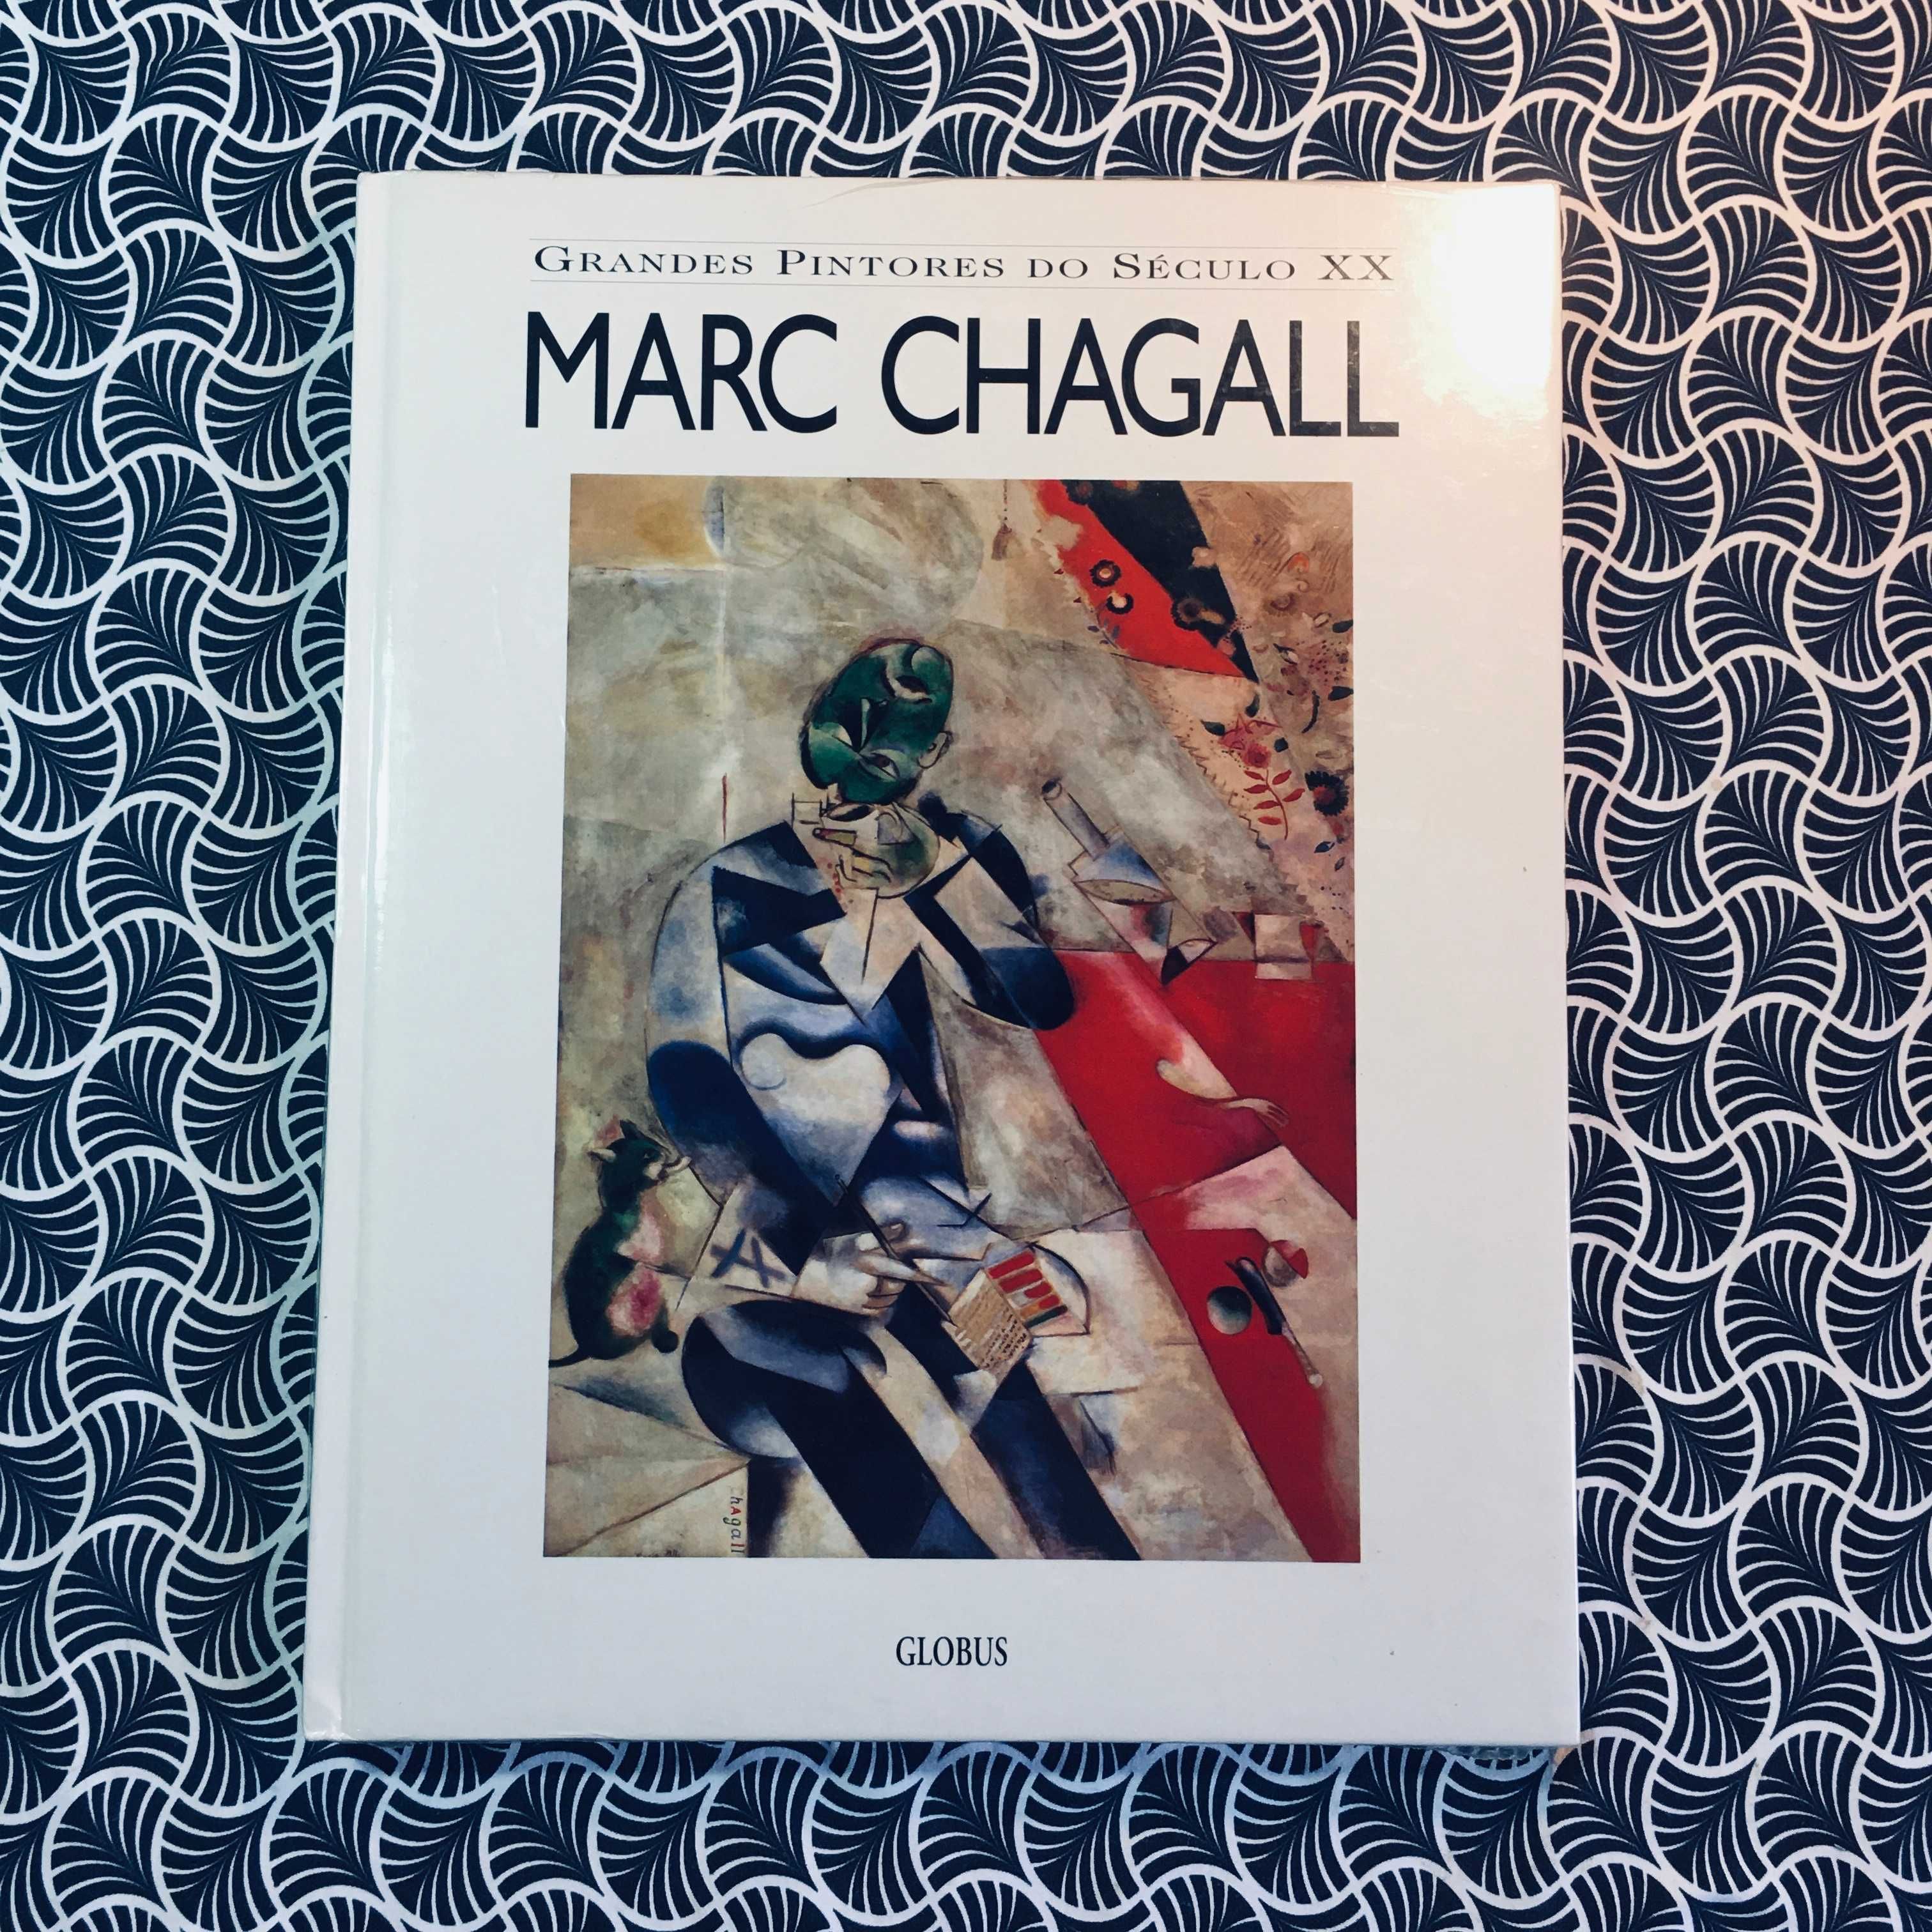 Marc Chagall: Grandes Pintores do Século XX nº18